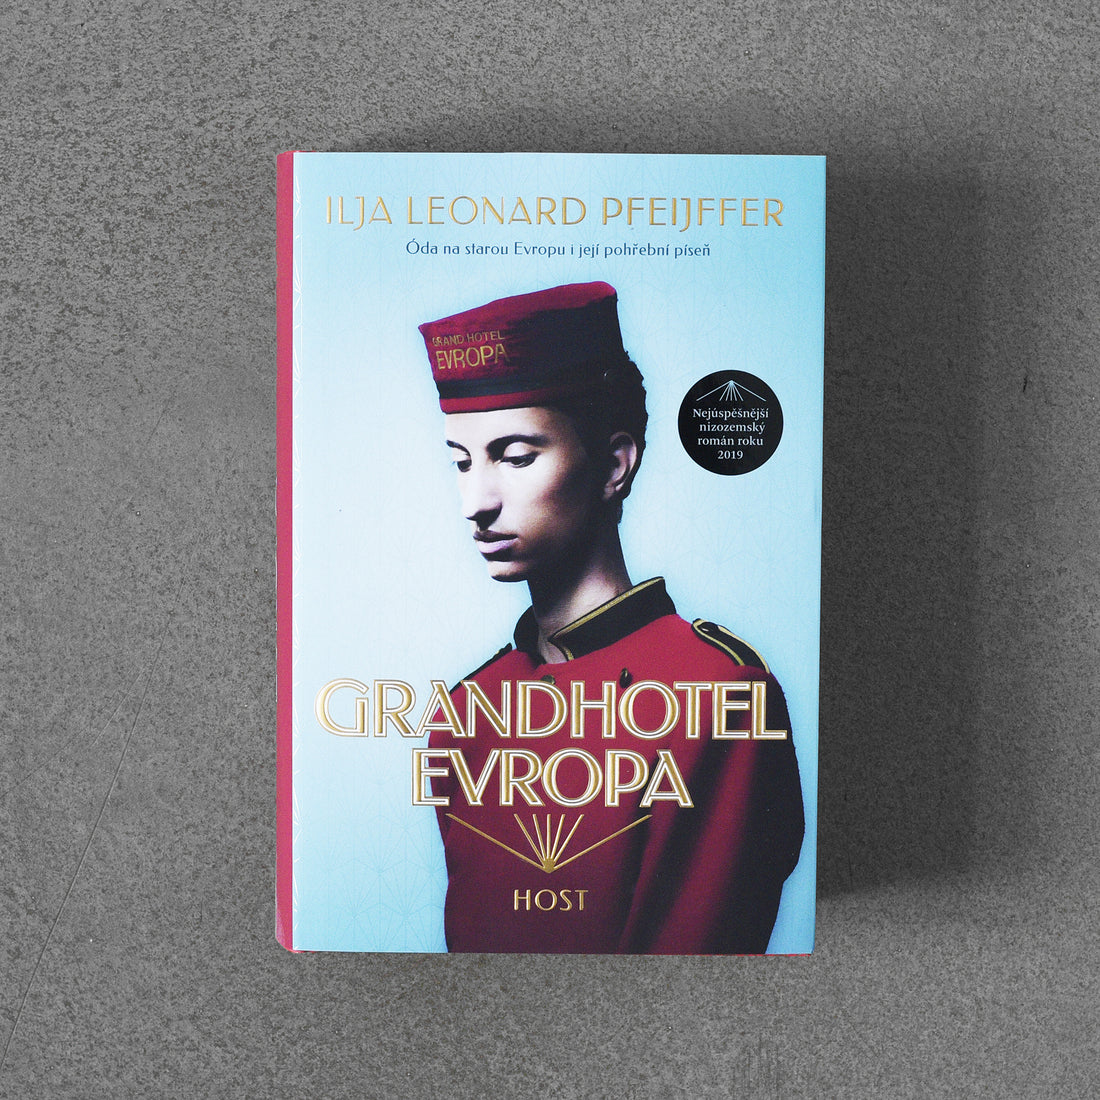 Grandhotel Europe – Ilja Leonard Pfeijffer